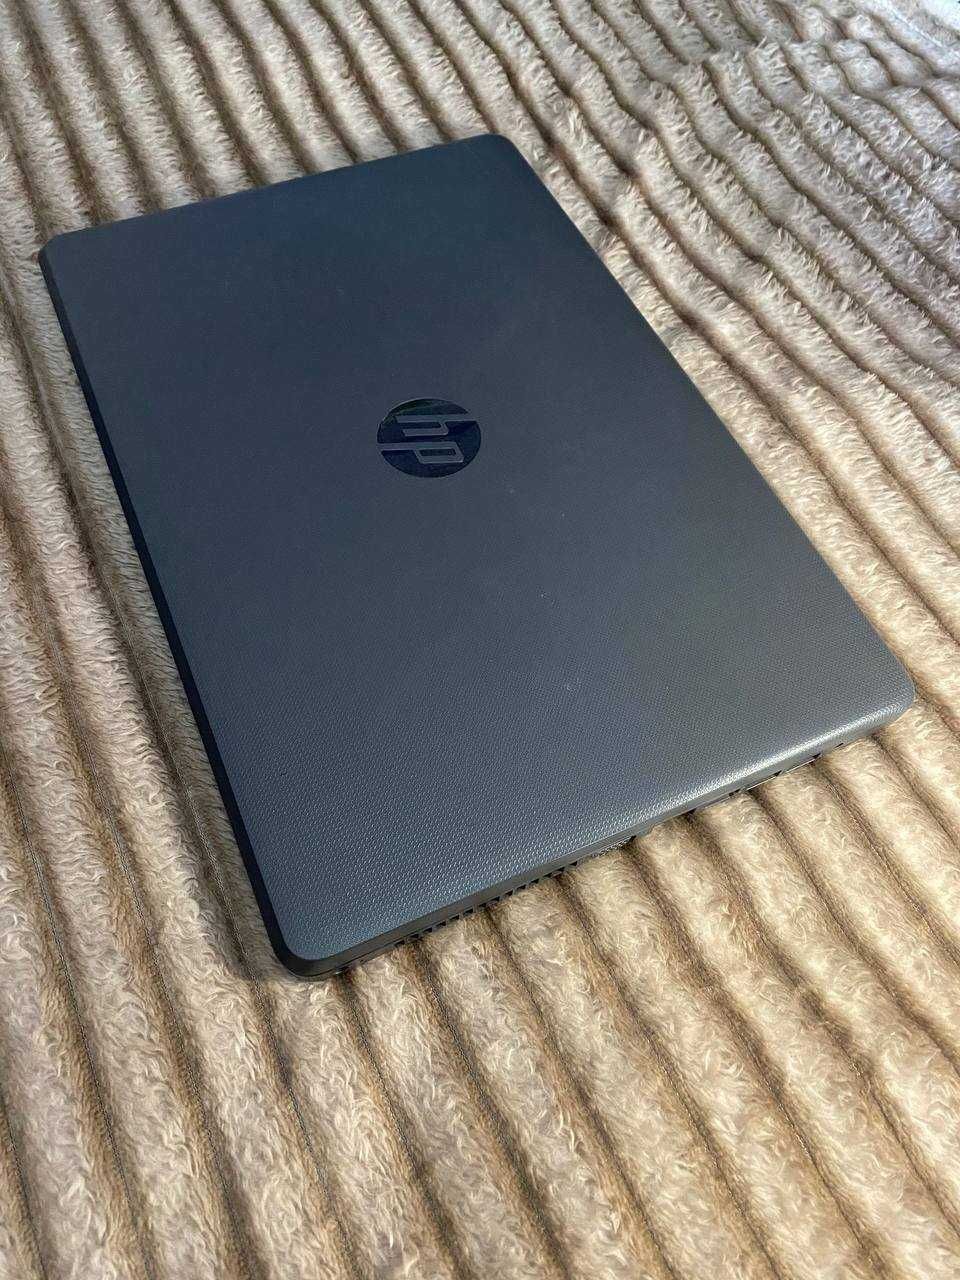 HP 250 g6(hp 3164 ngw ноутбук)